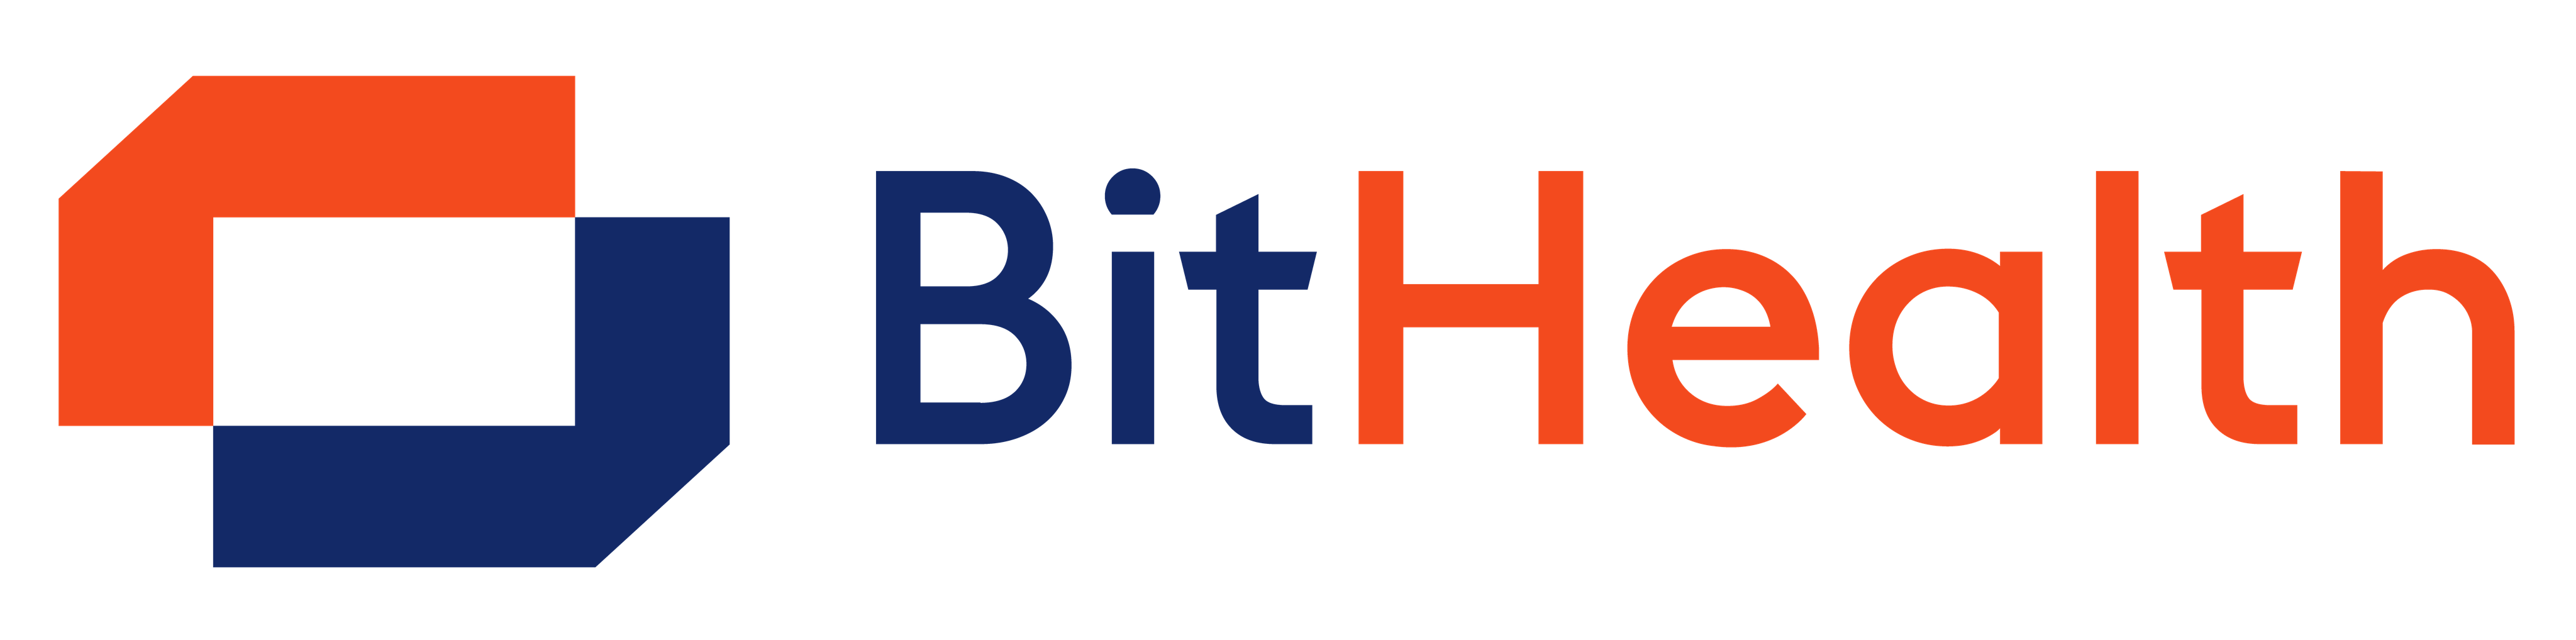 Bithealth